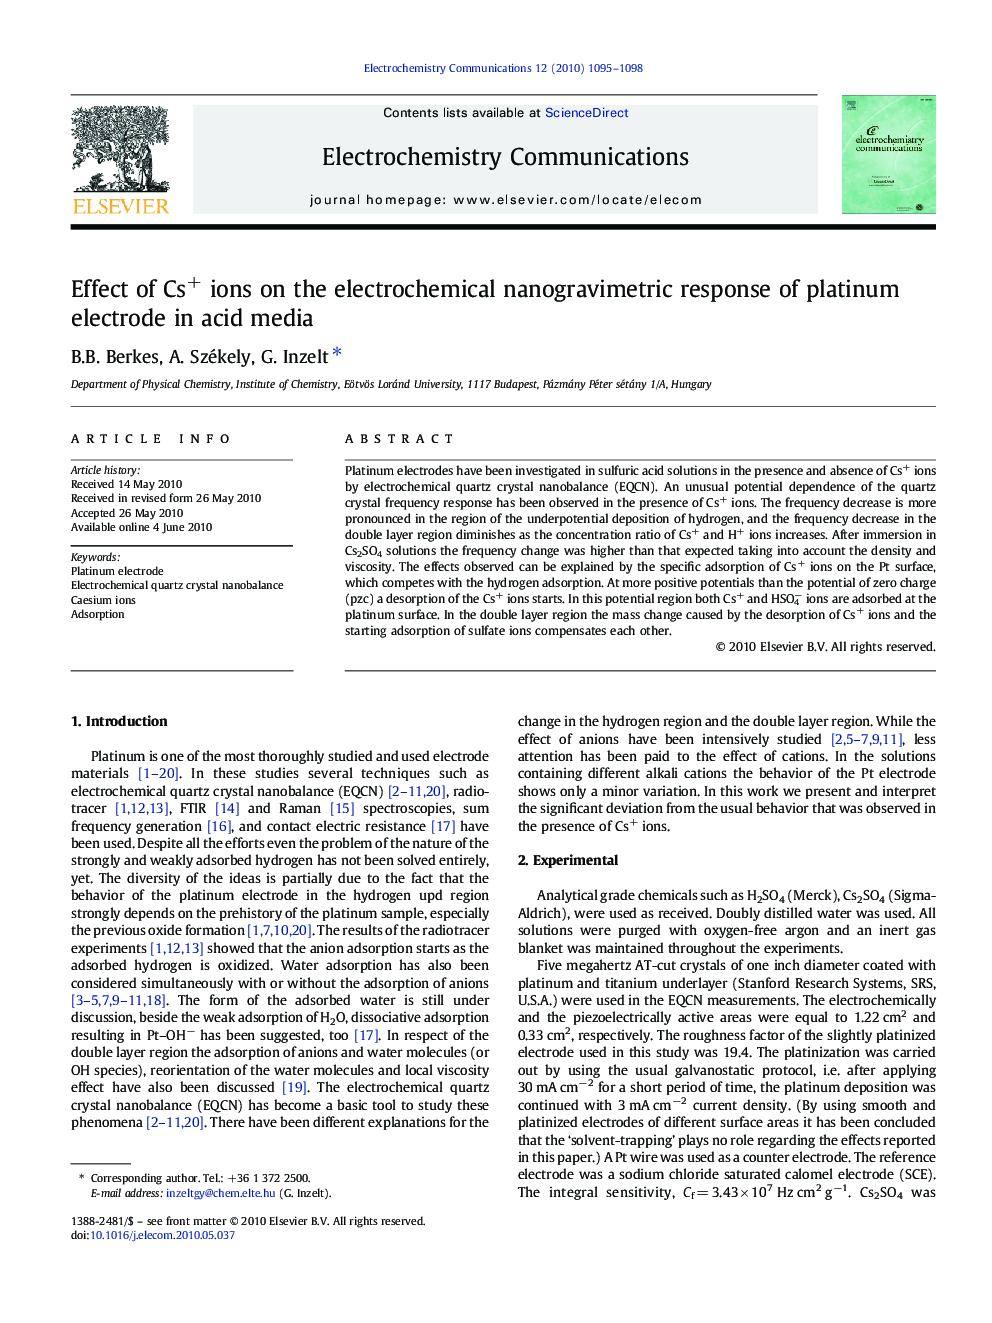 Effect of Cs+ ions on the electrochemical nanogravimetric response of platinum electrode in acid media